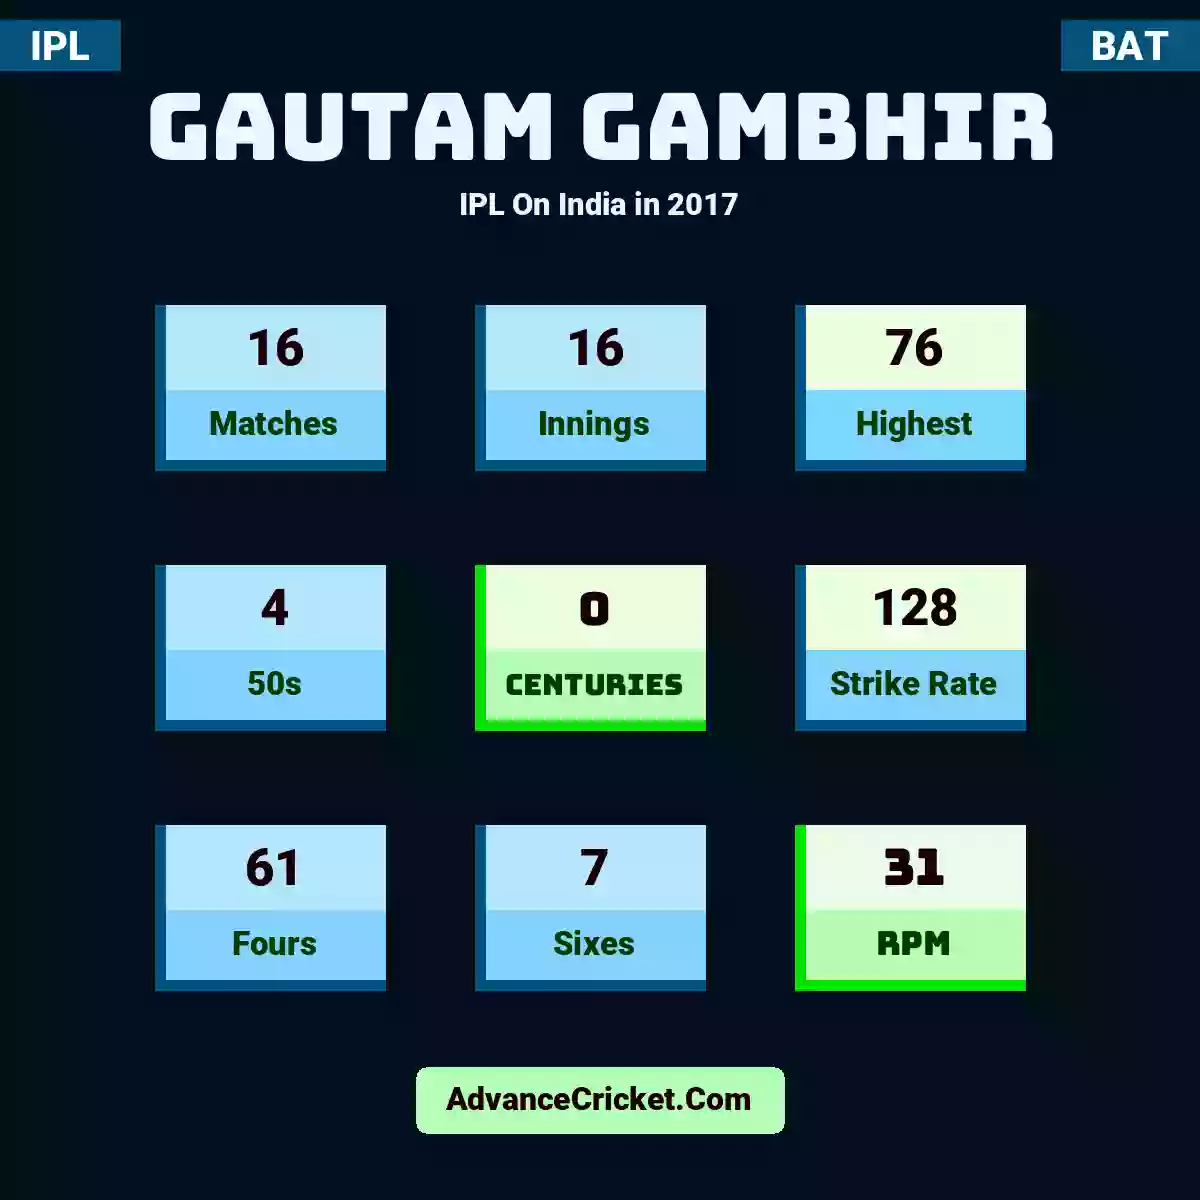 Gautam Gambhir IPL  On India in 2017, Gautam Gambhir played 16 matches, scored 76 runs as highest, 4 half-centuries, and 0 centuries, with a strike rate of 128. G.Gambhir hit 61 fours and 7 sixes, with an RPM of 31.